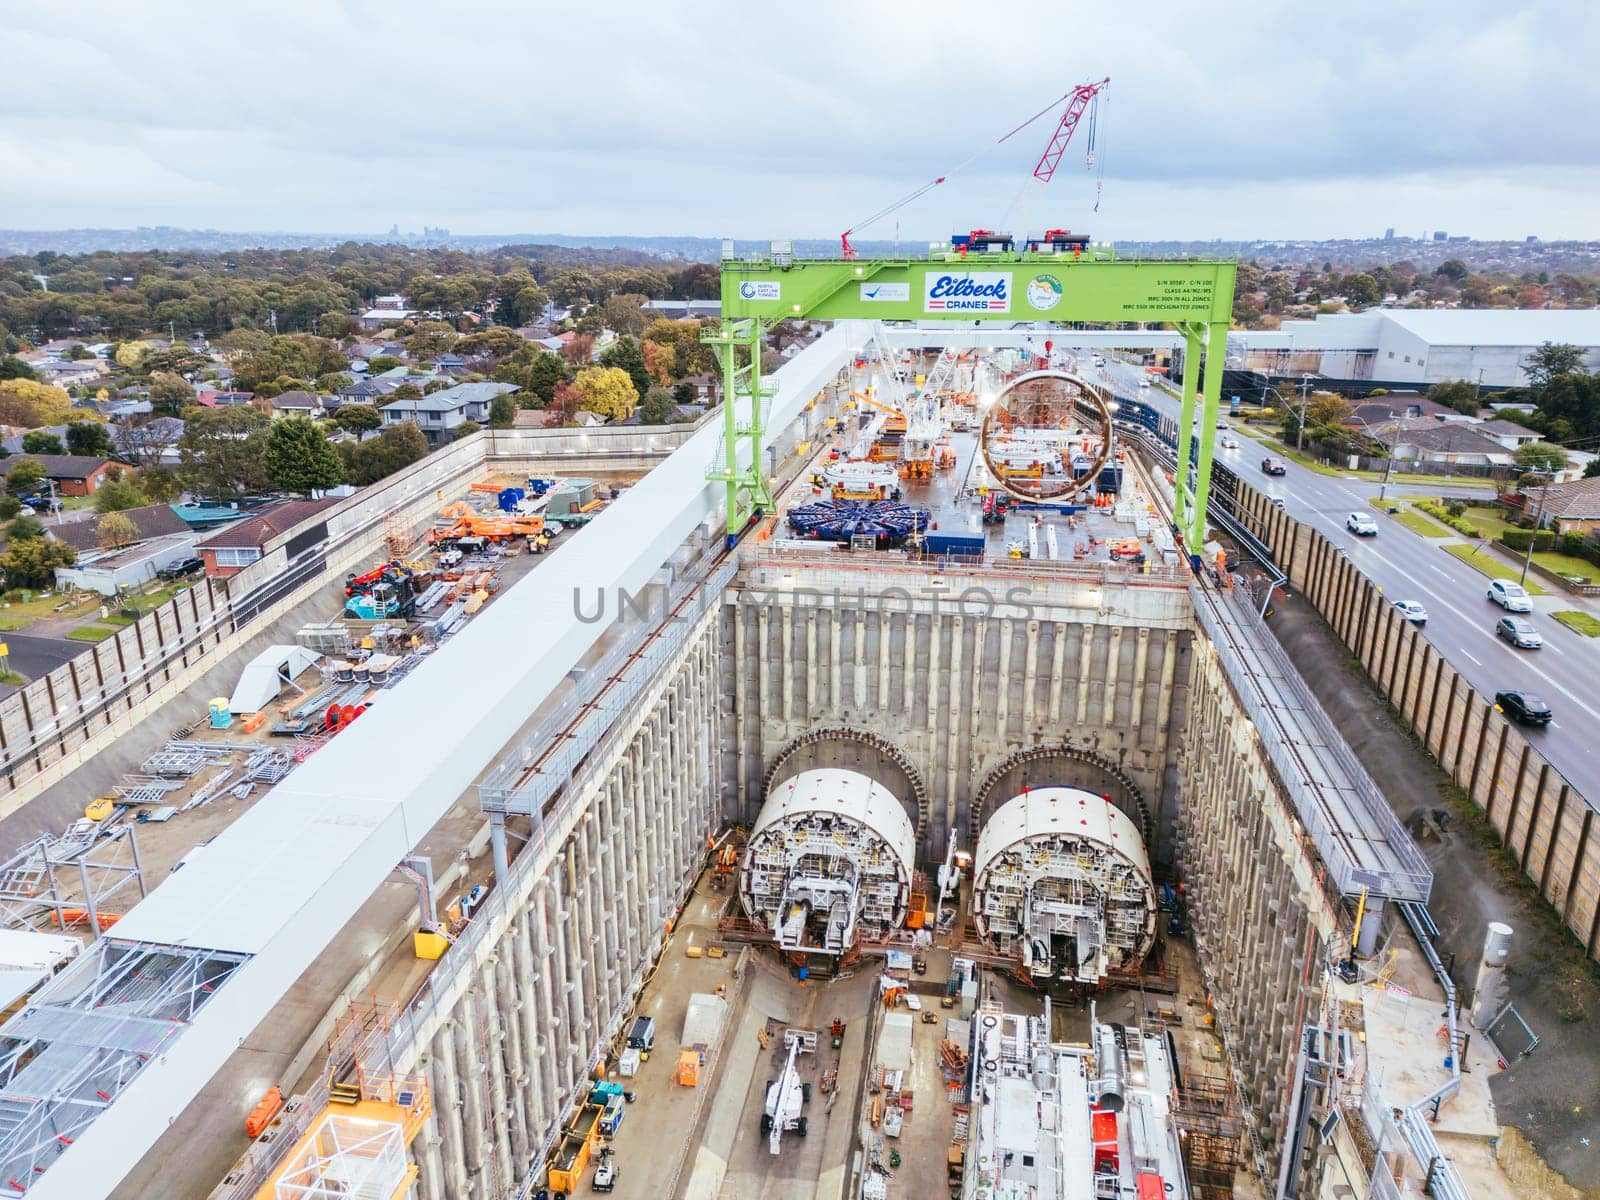 North East Link Under Construction in Melbourne Australia by FiledIMAGE